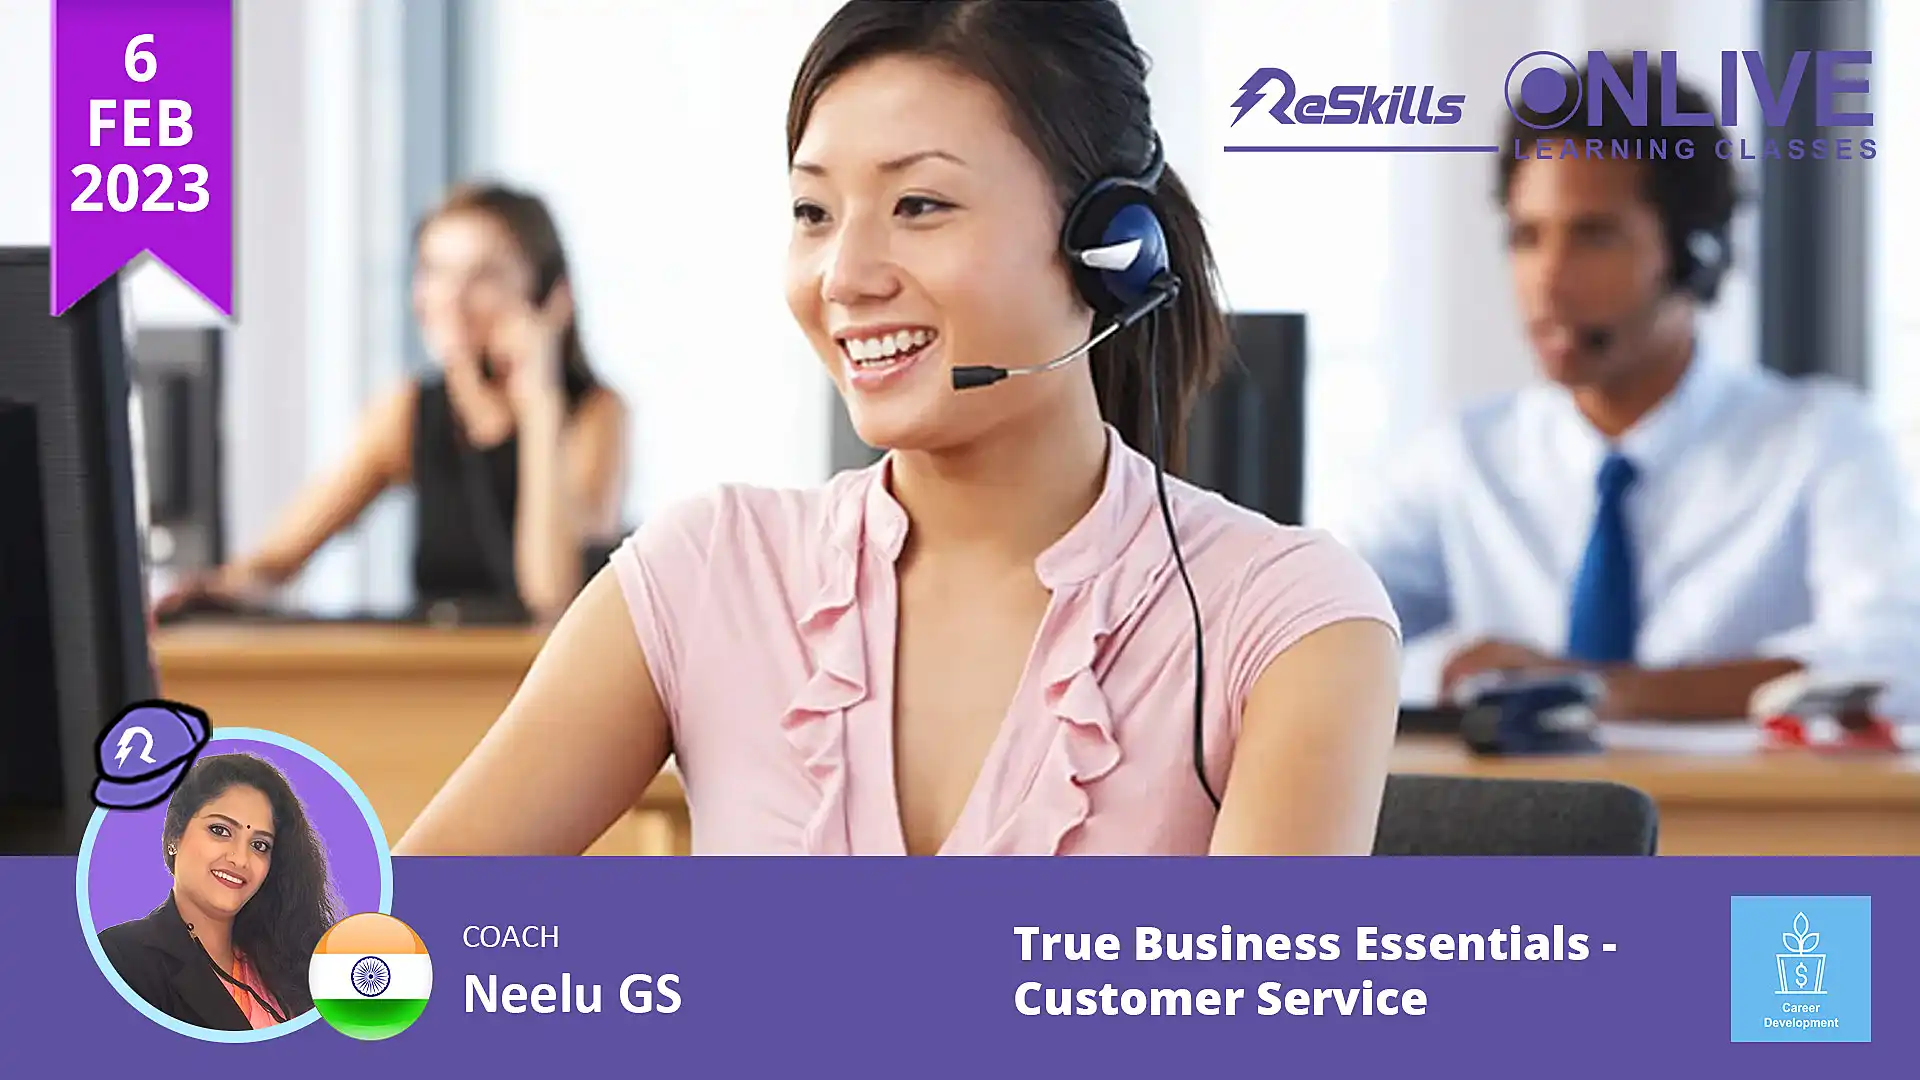 True Business Essentials - Customer Service - ReSkills